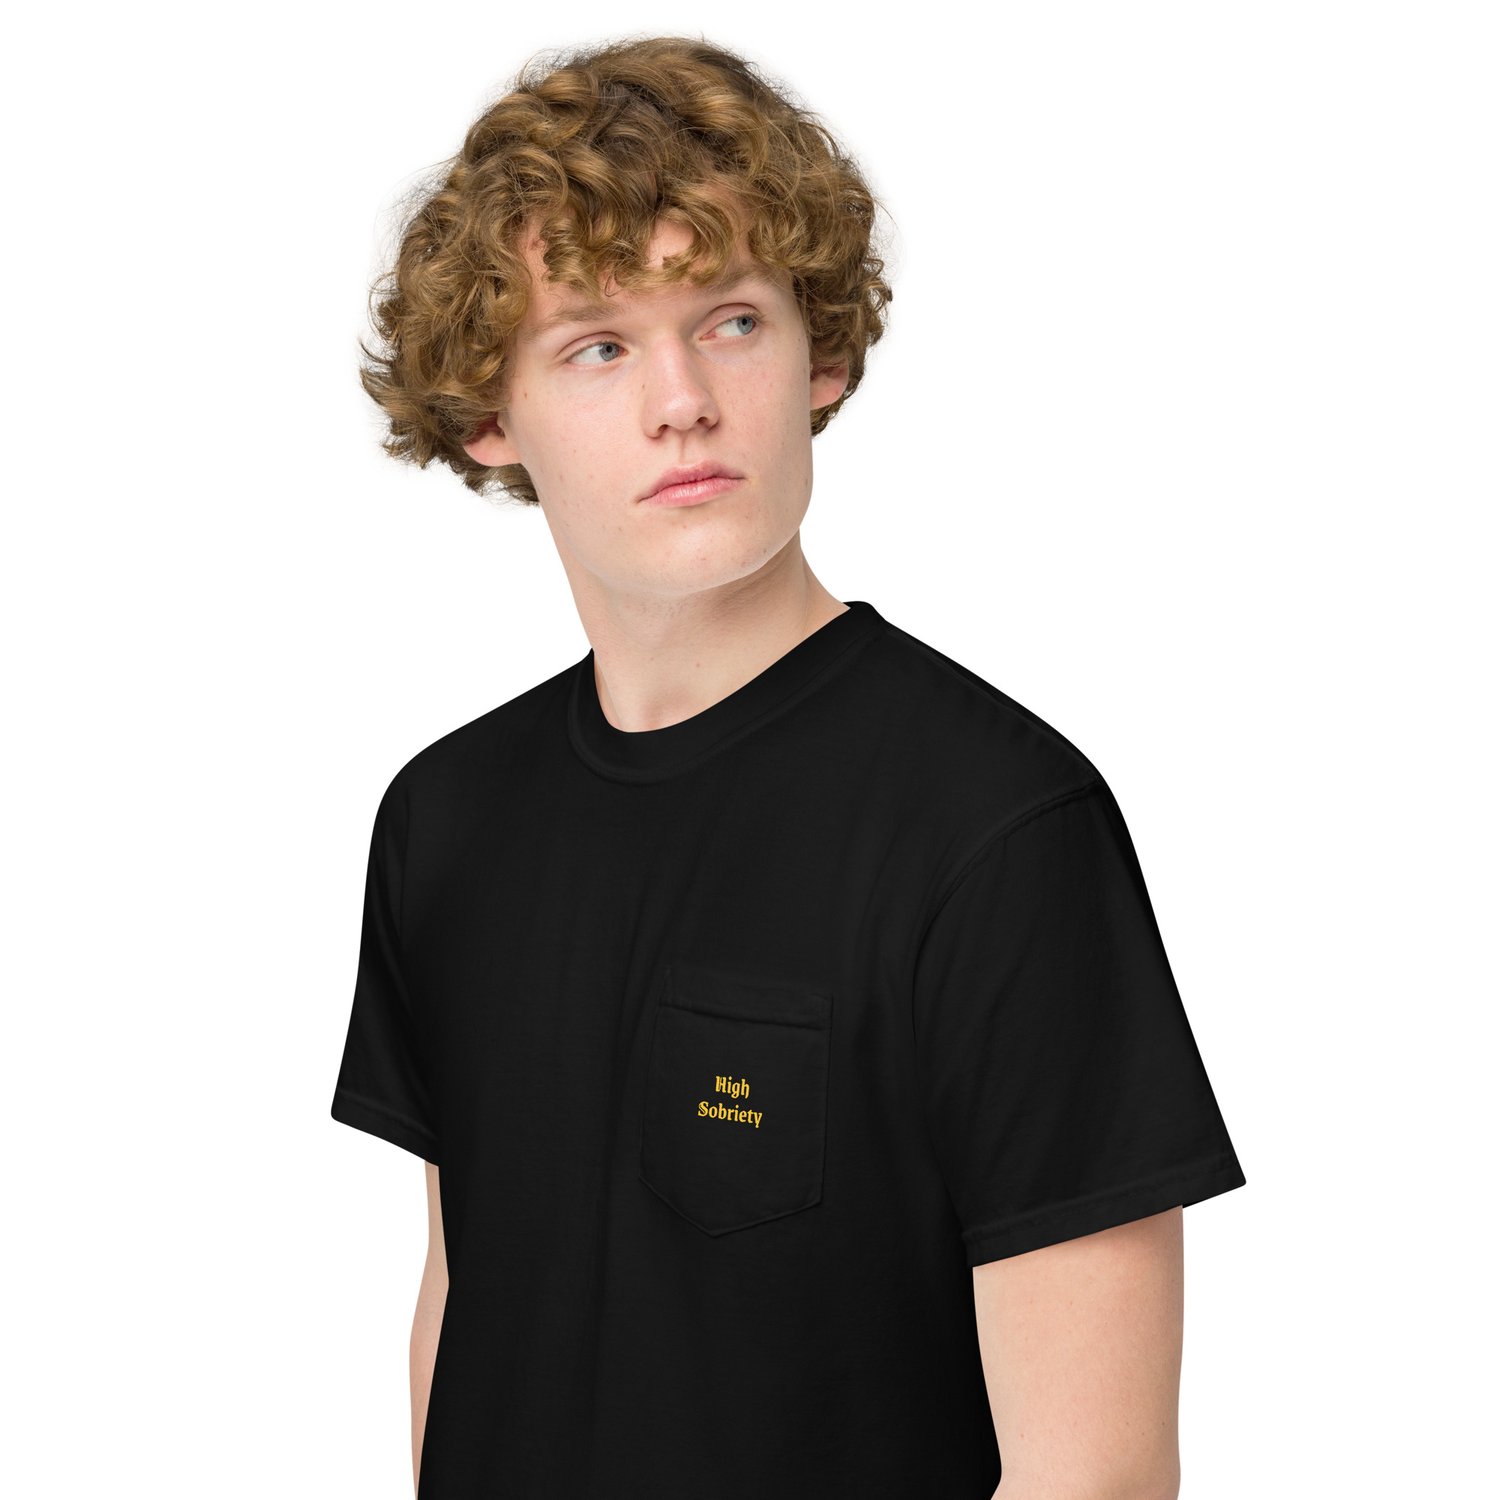 Image of "High Sobriety" Unisex garment-dyed pocket t-shirt